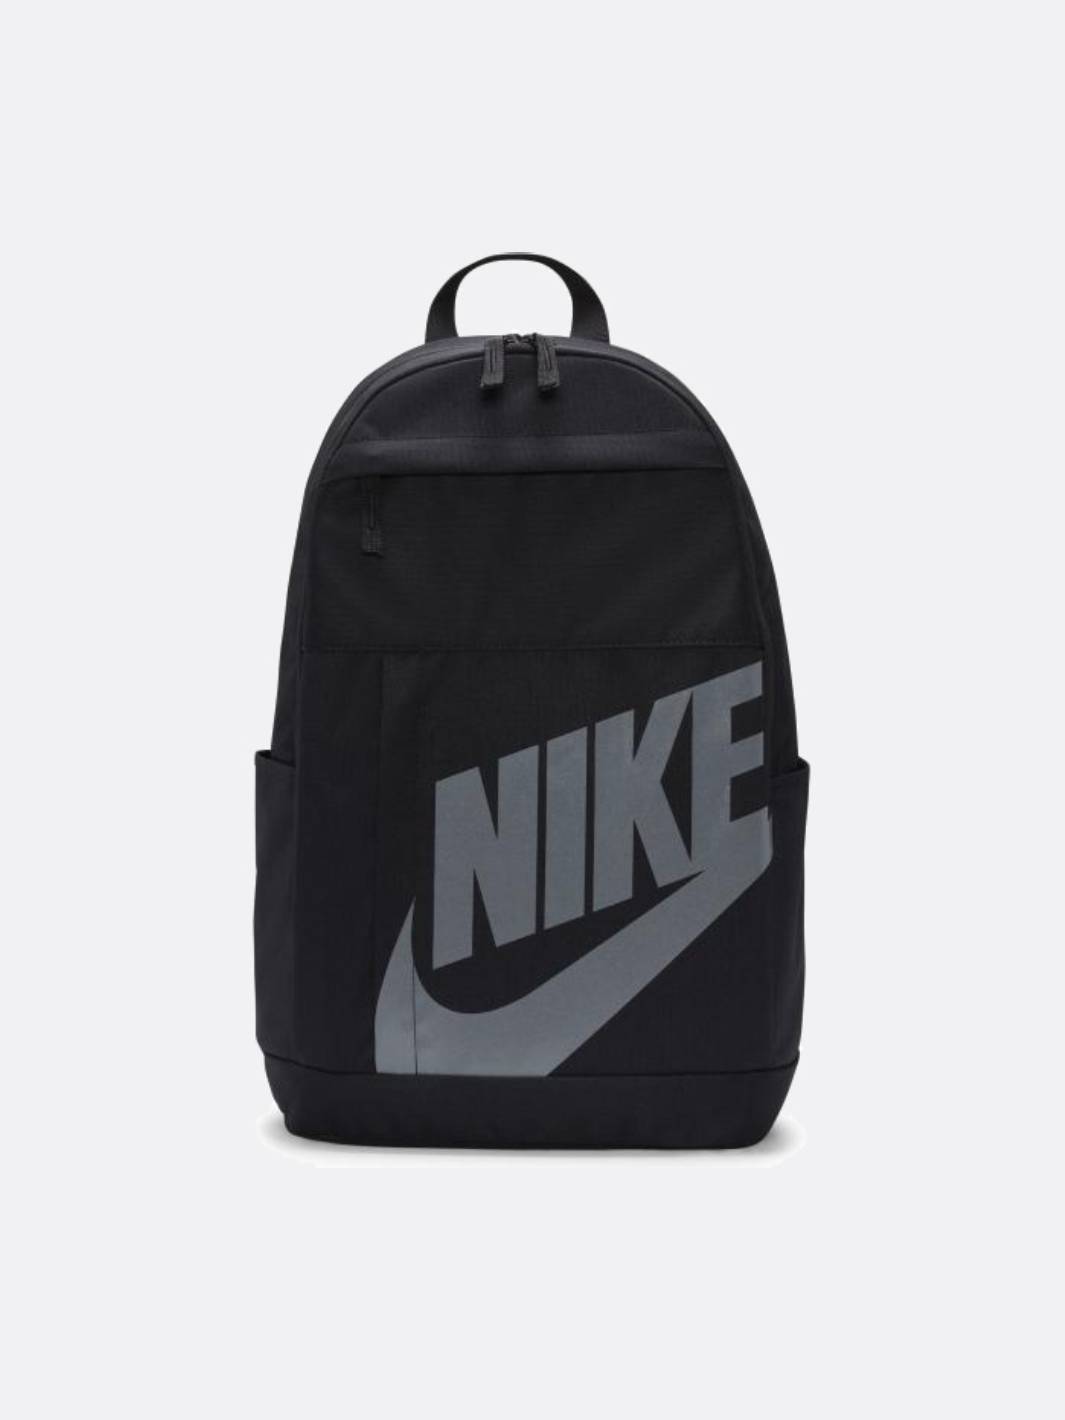 Nike Accessories - Elemental Backpack - Black/Reflective - Nohble